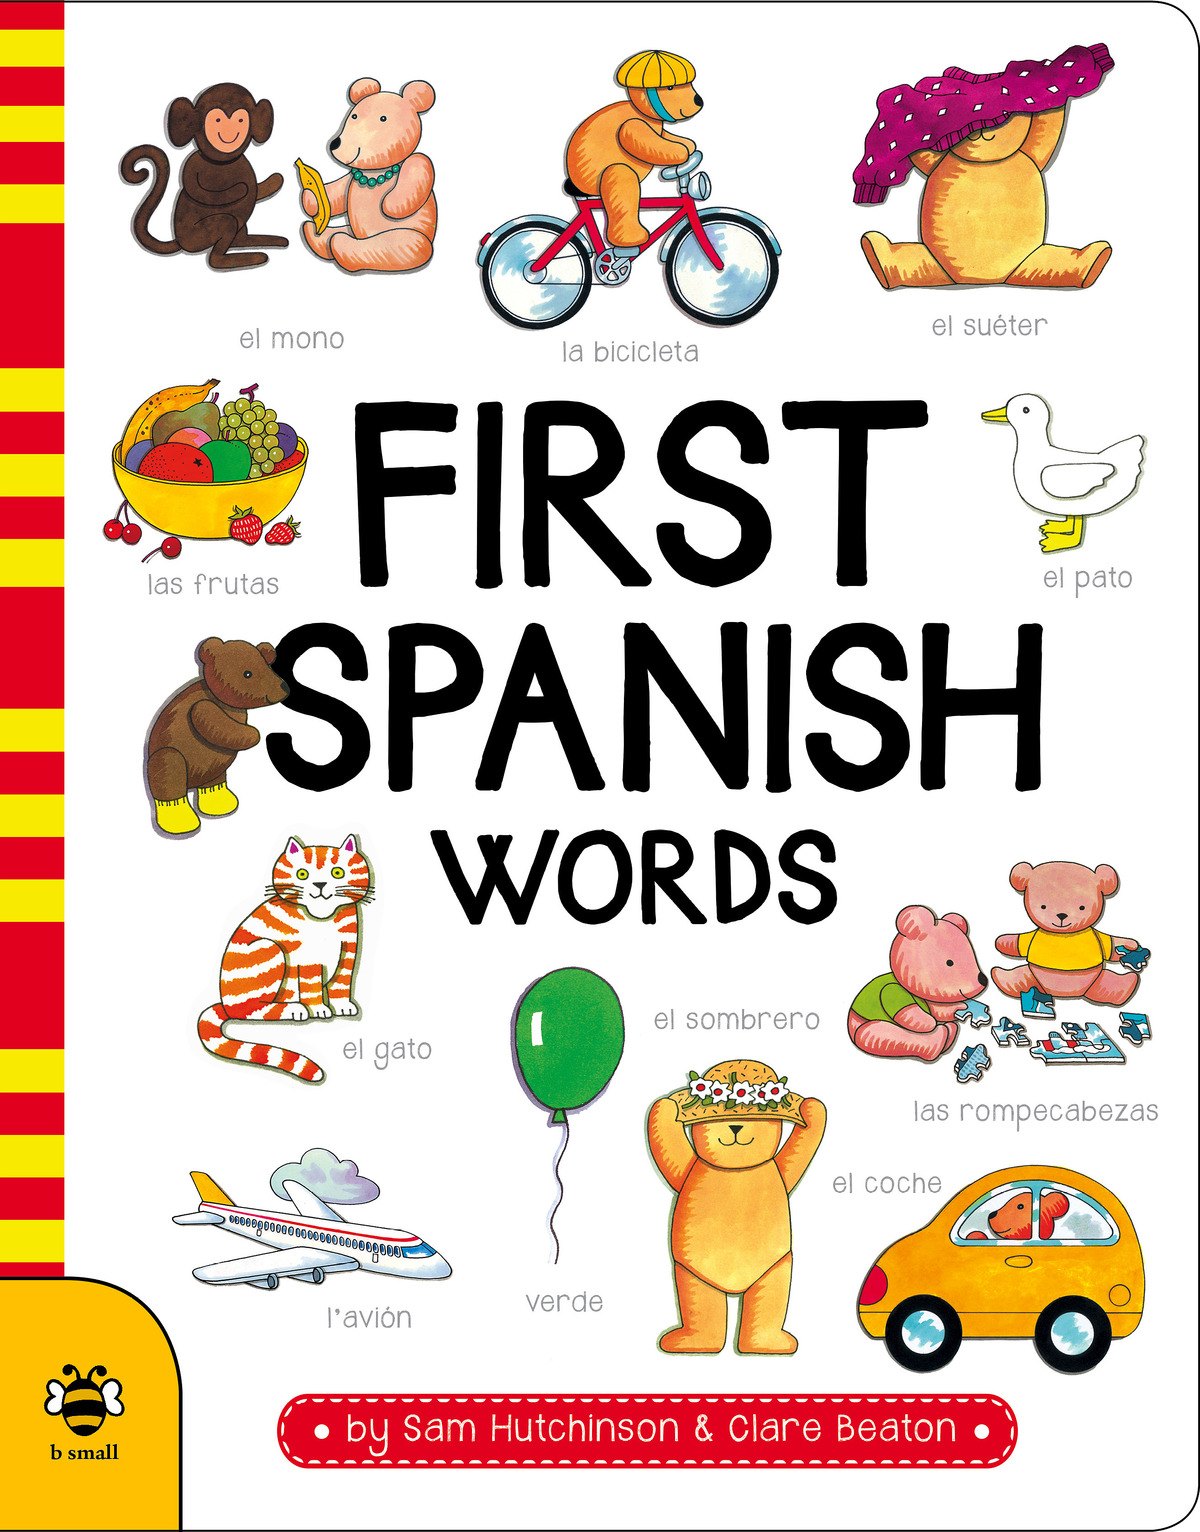 Spain words. Spanish Words. Spain Word. Espanol Words. Spanish Words start with b.